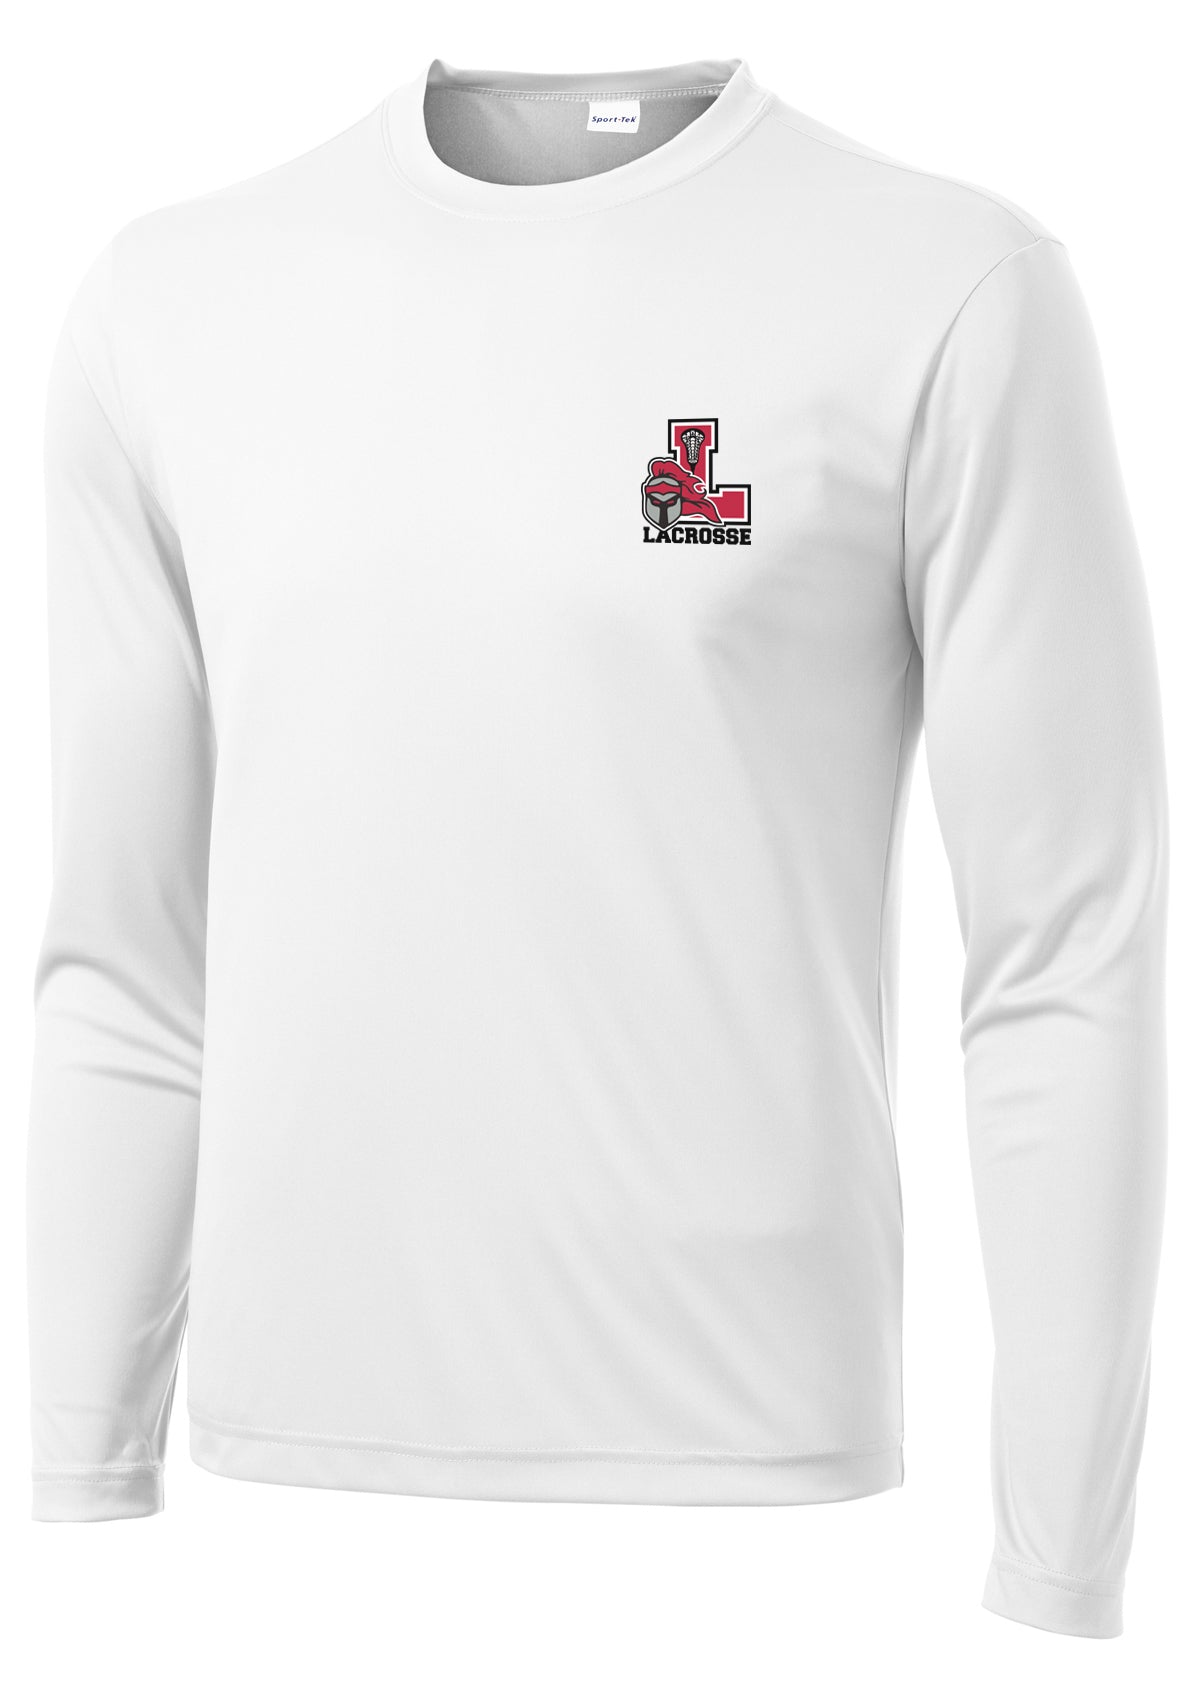 Lancaster Legends Lacrosse White Long Sleeve Performance Shirt